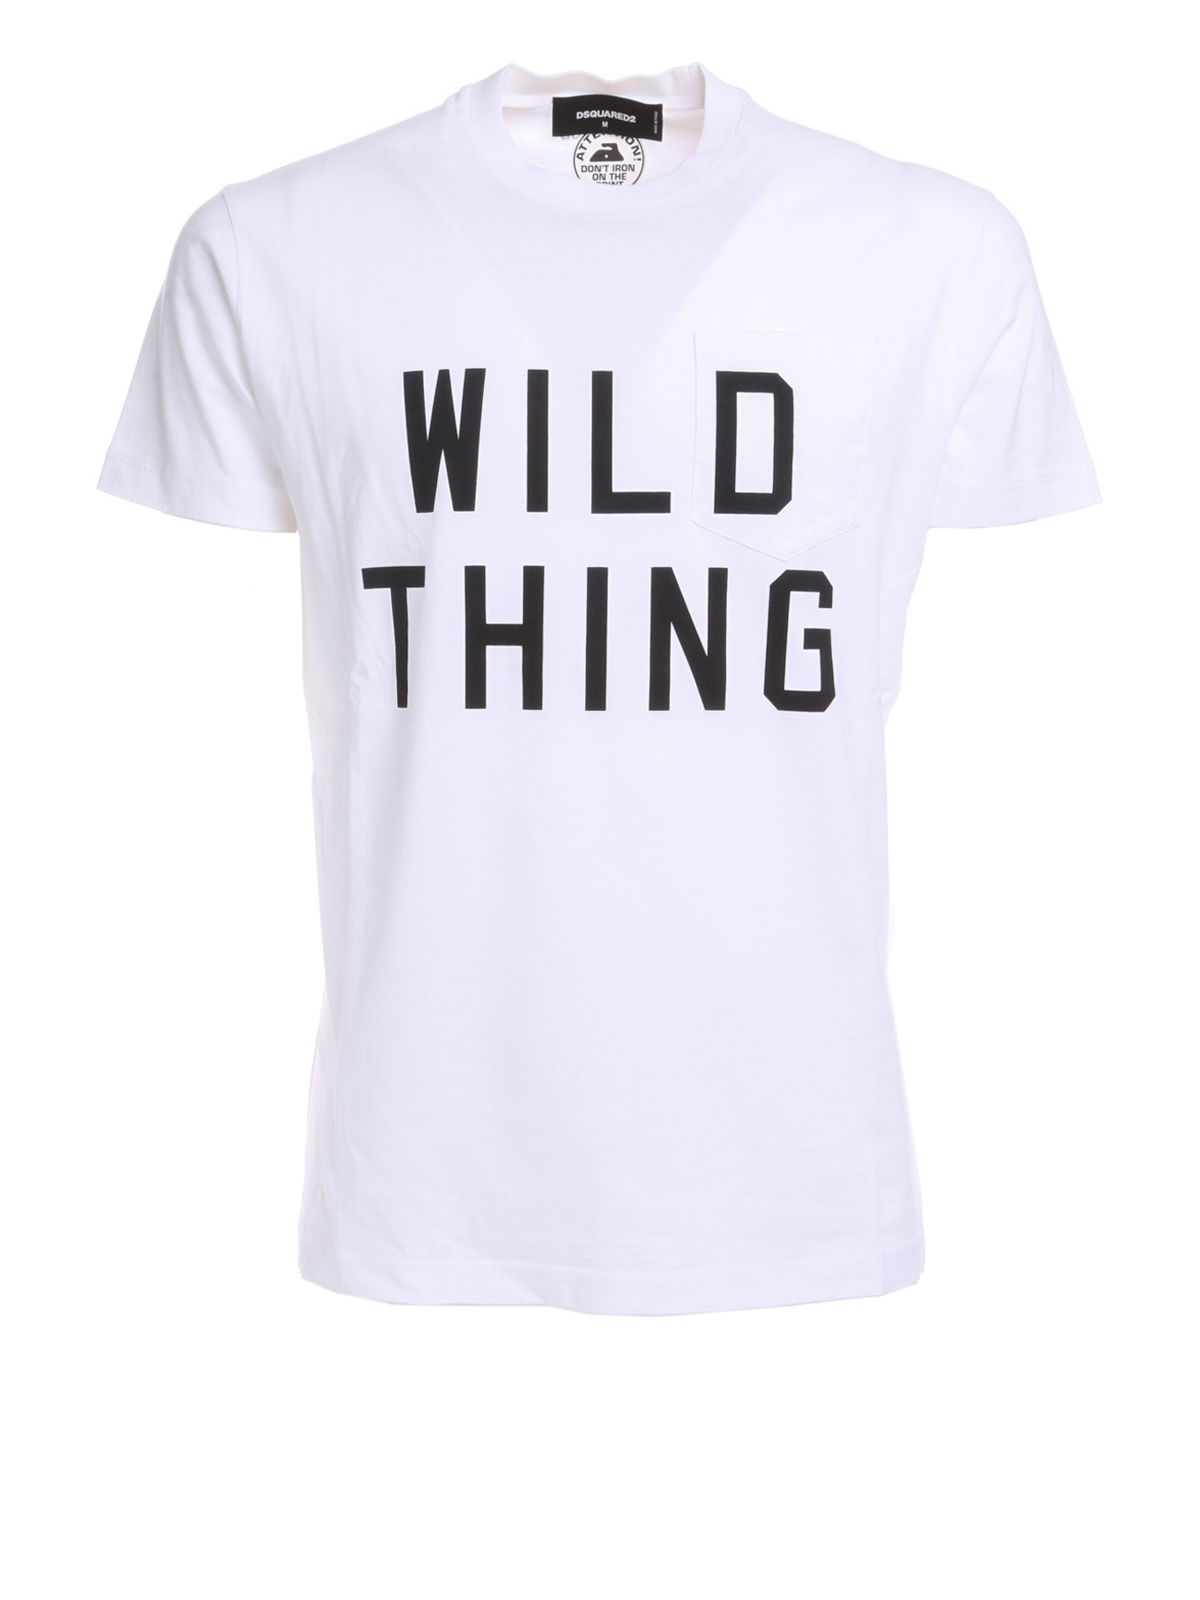 WILD THING, Shirts